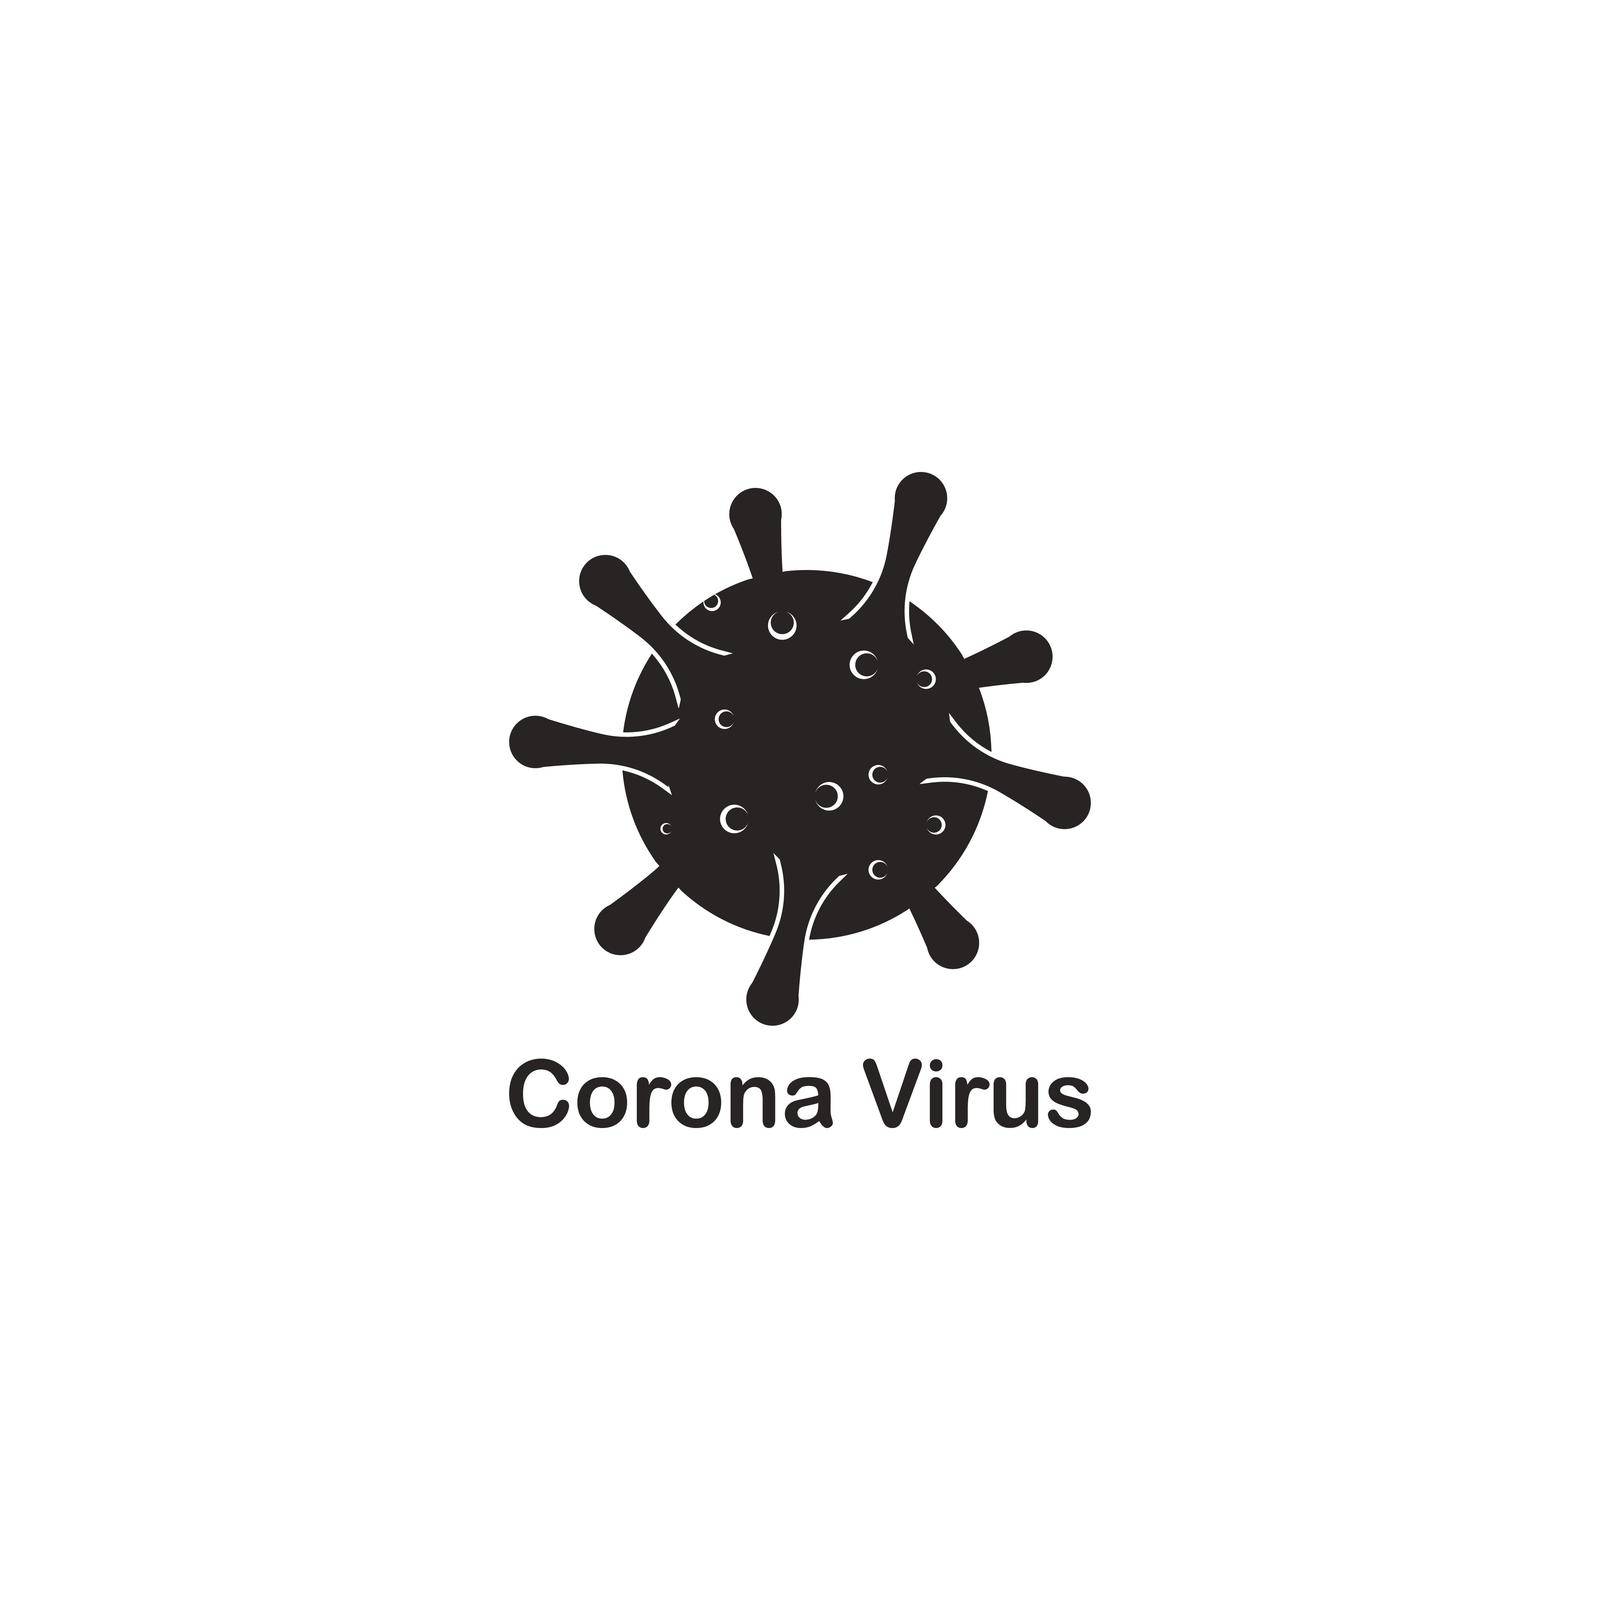 Coronavirus icon by rnking